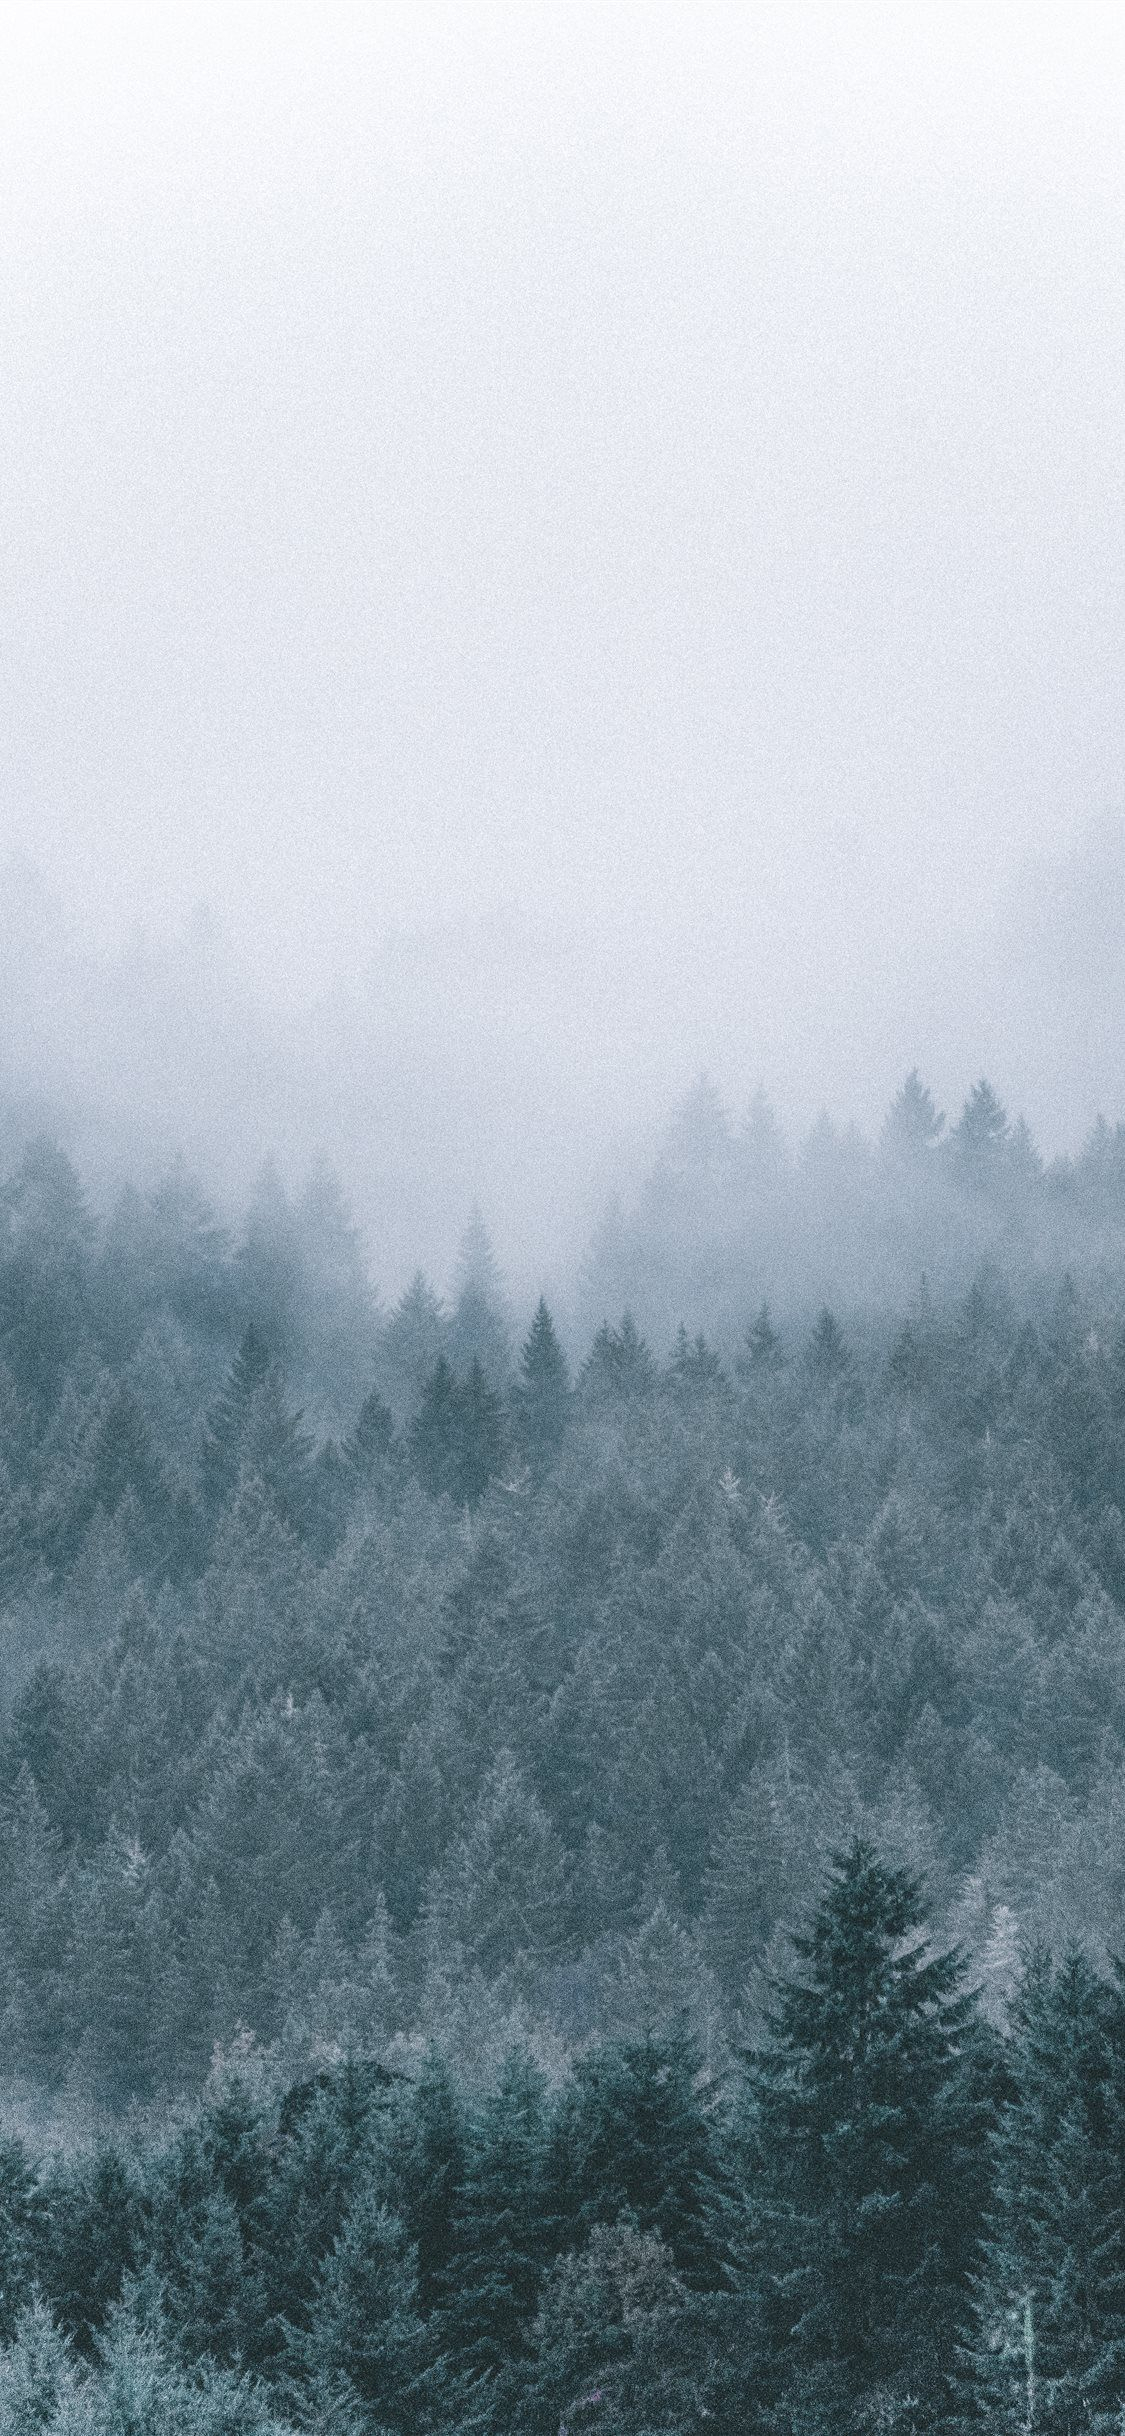 1125x2436 foggy icy green pine trees scenery Wallpaper | Forest wallpaper, Scenery wallpaper, Tree mountain wallpaper